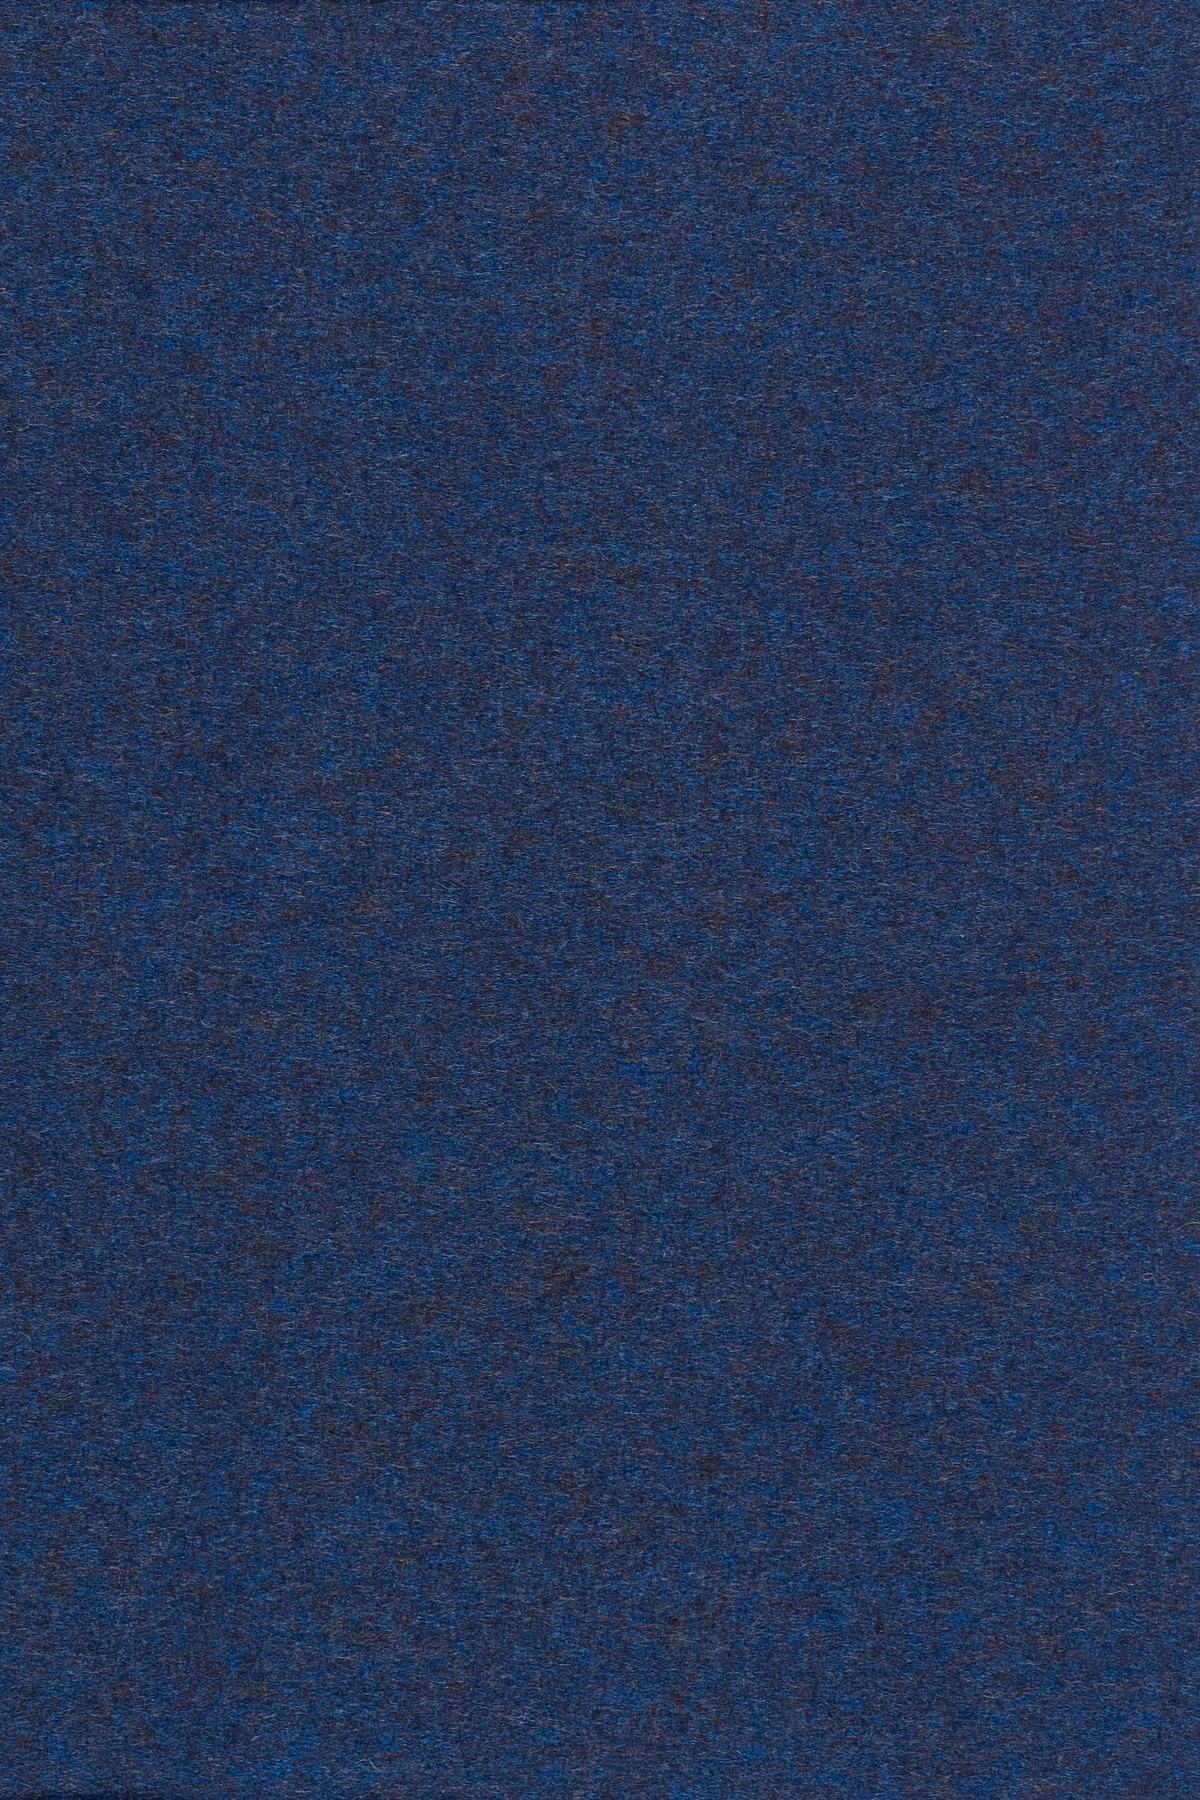 Fabric sample Divina MD 773 blue